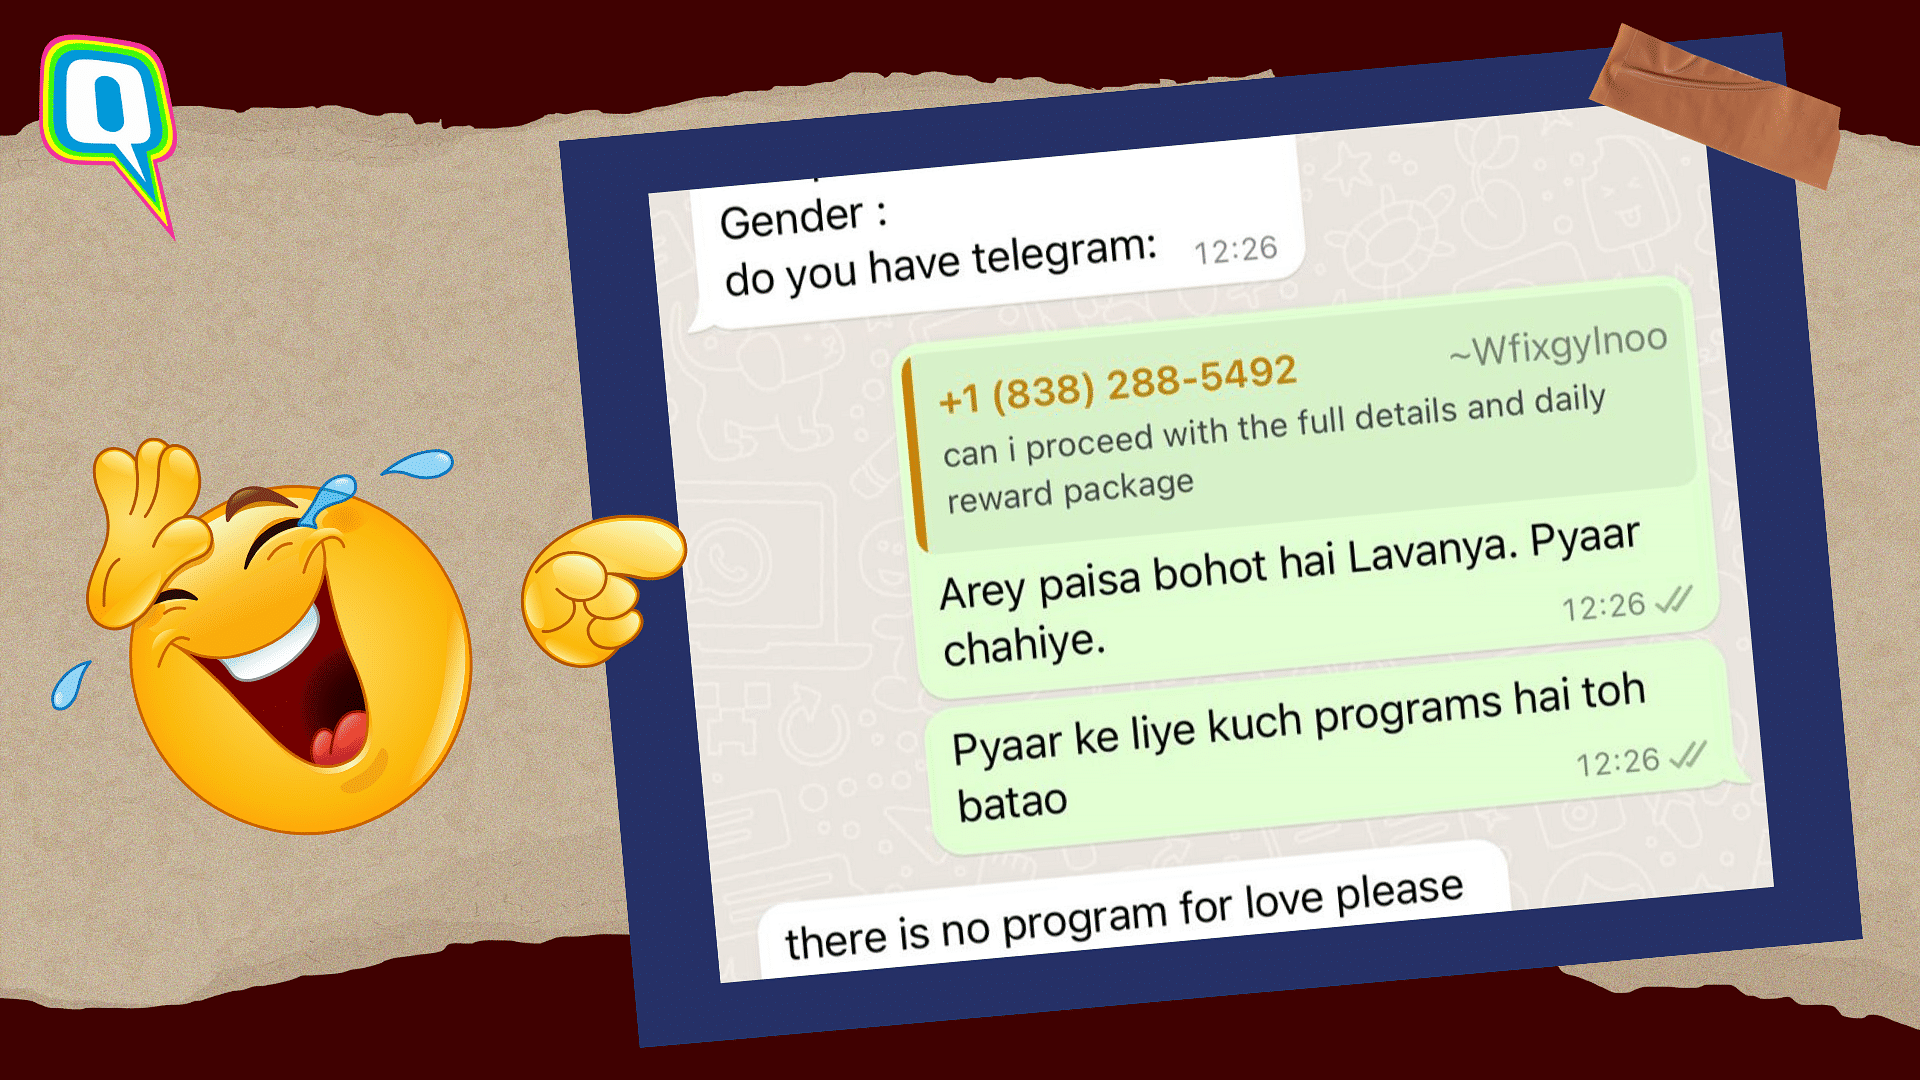 <div class="paragraphs"><p>'Paisa hai, Pyaar chahiye': Man Engages WhatsApp Scammer in Hilarious Banter</p></div>